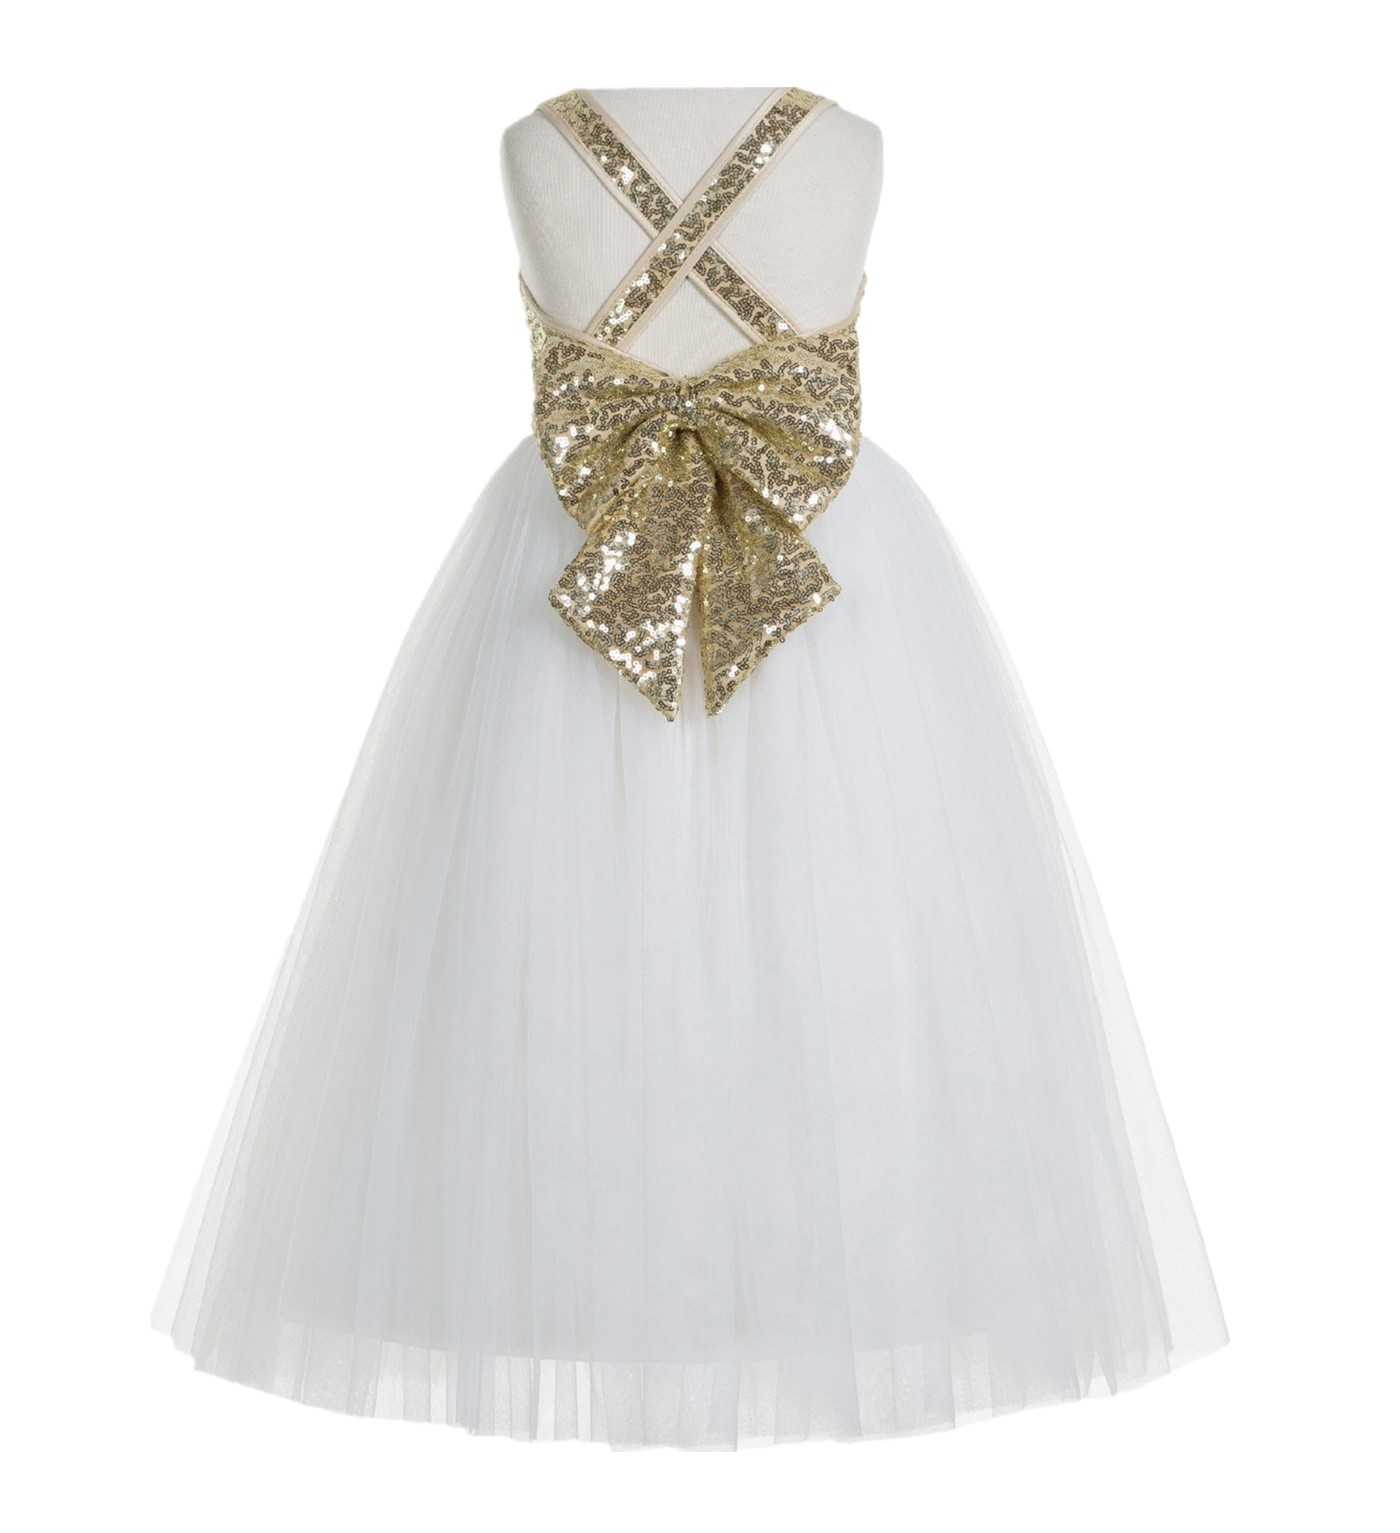 Gold / Ivory Crossed Straps A-Line Flower Girl Dress 177